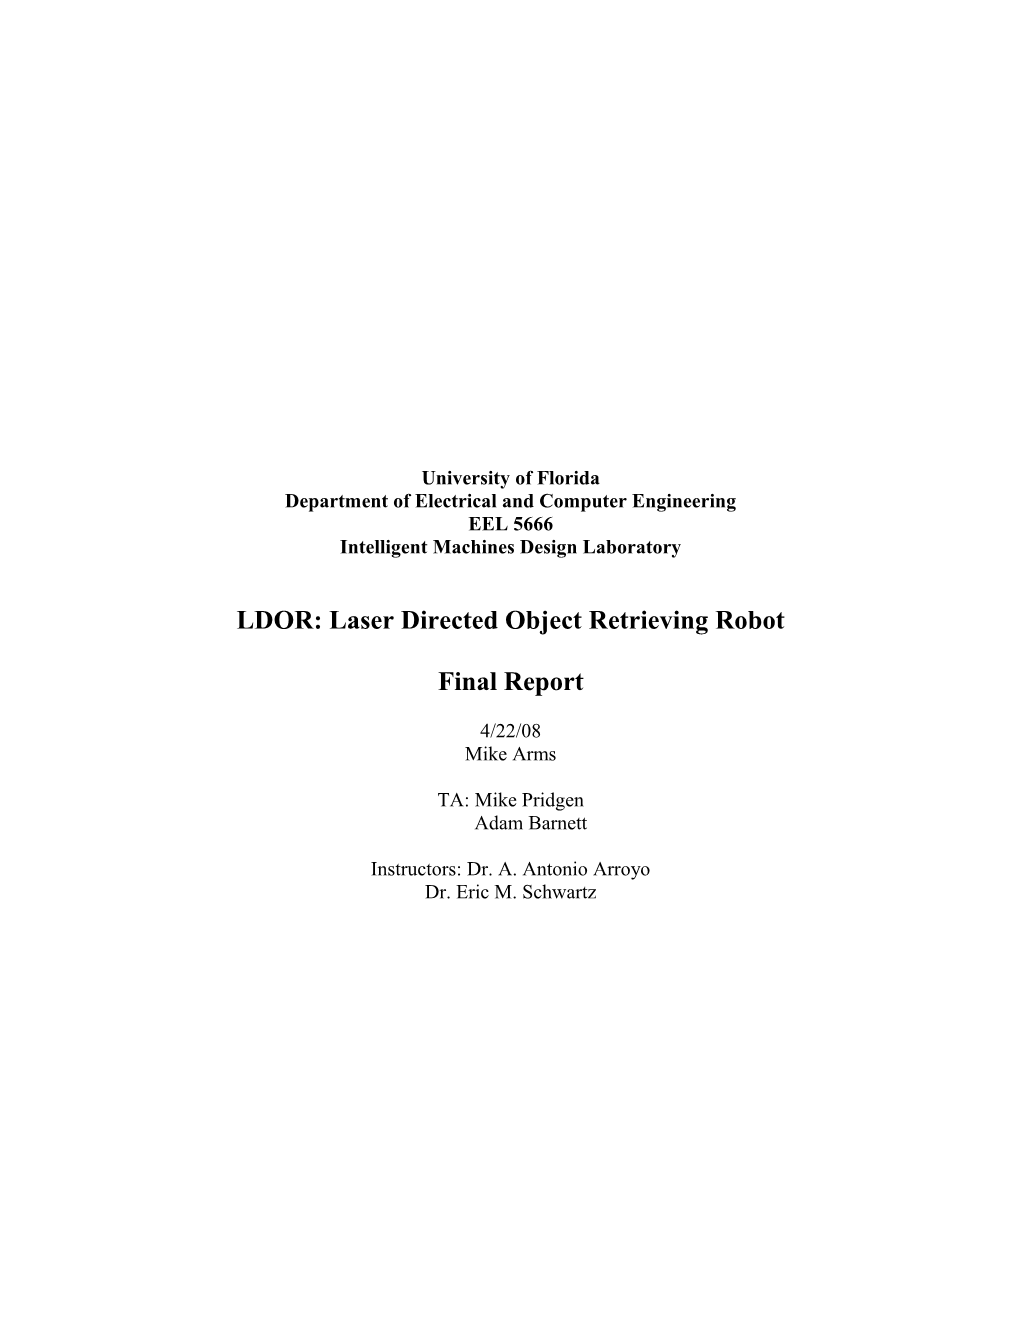 EEL5666 L-DOR: Formal Report I Mike Arms